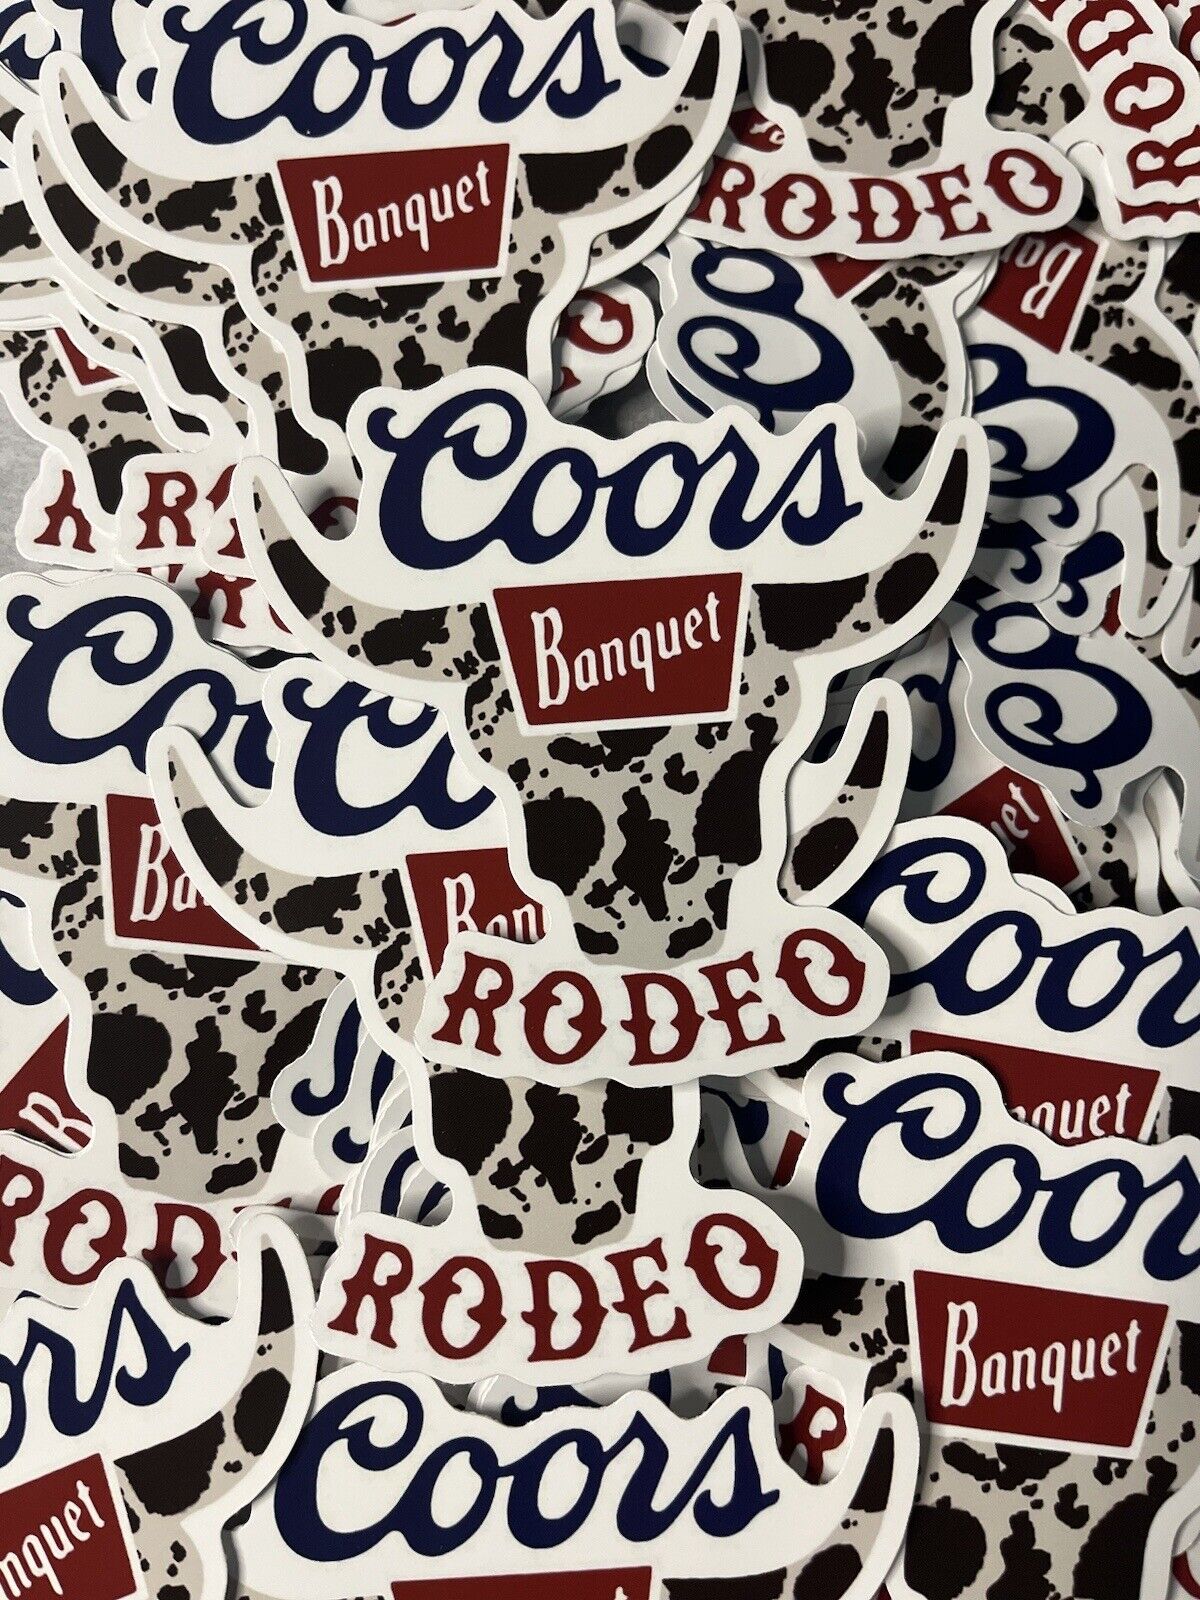 coors banquet Rodeo Cow print Sticker